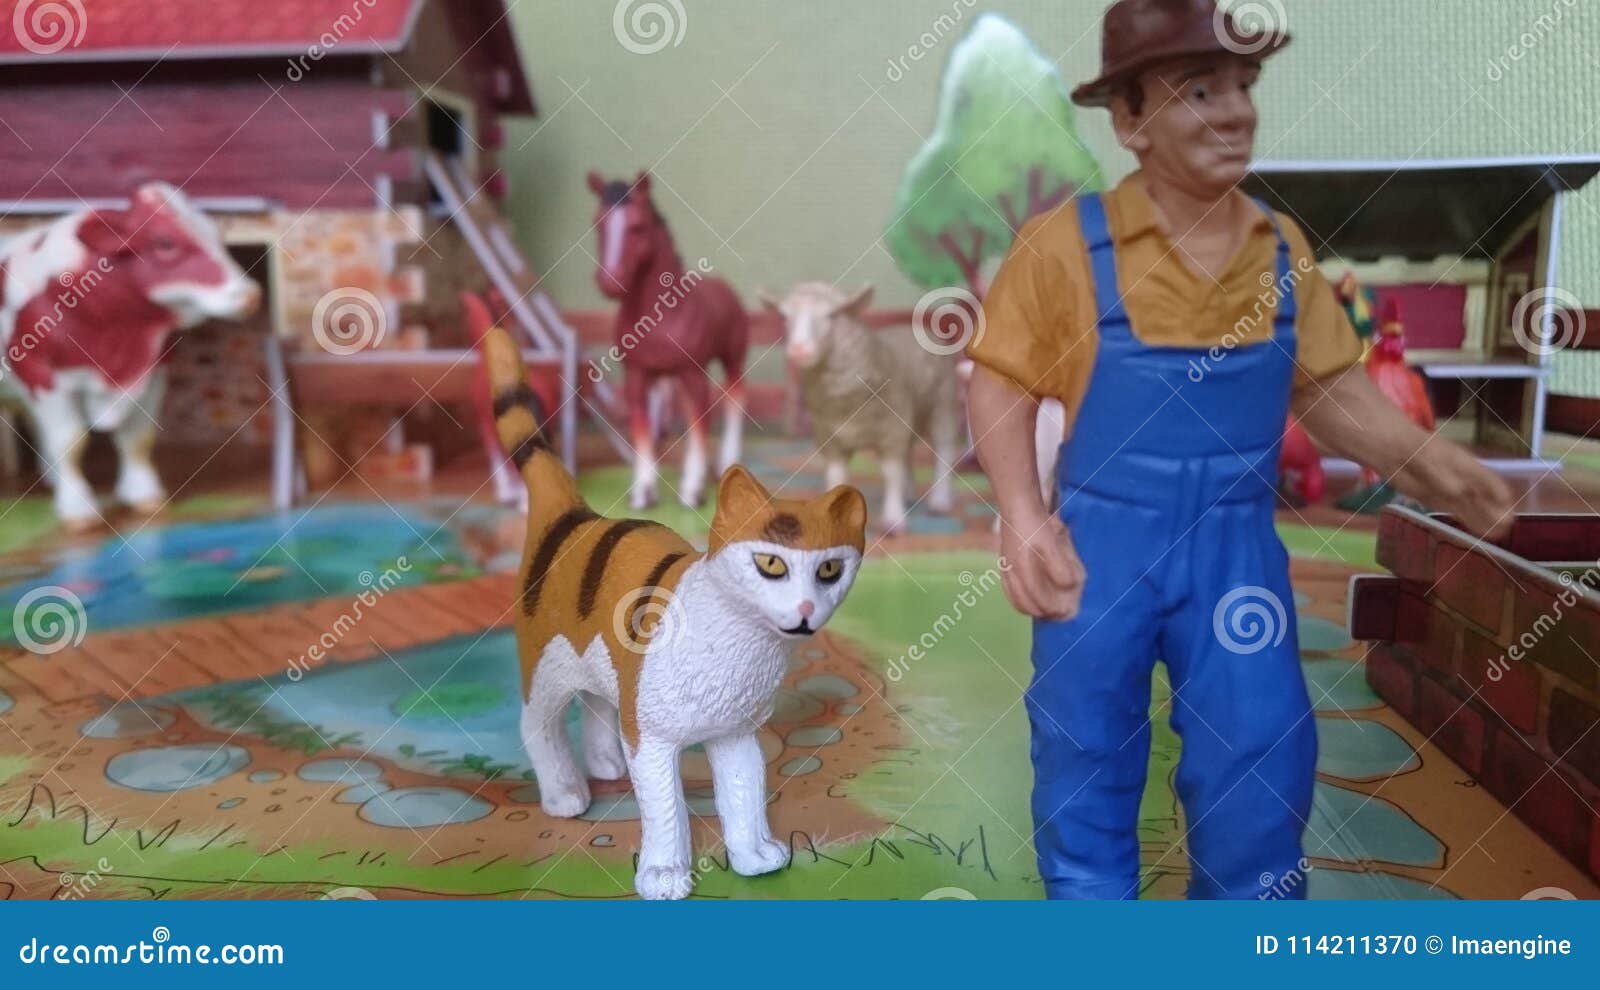 animal farm diorama display